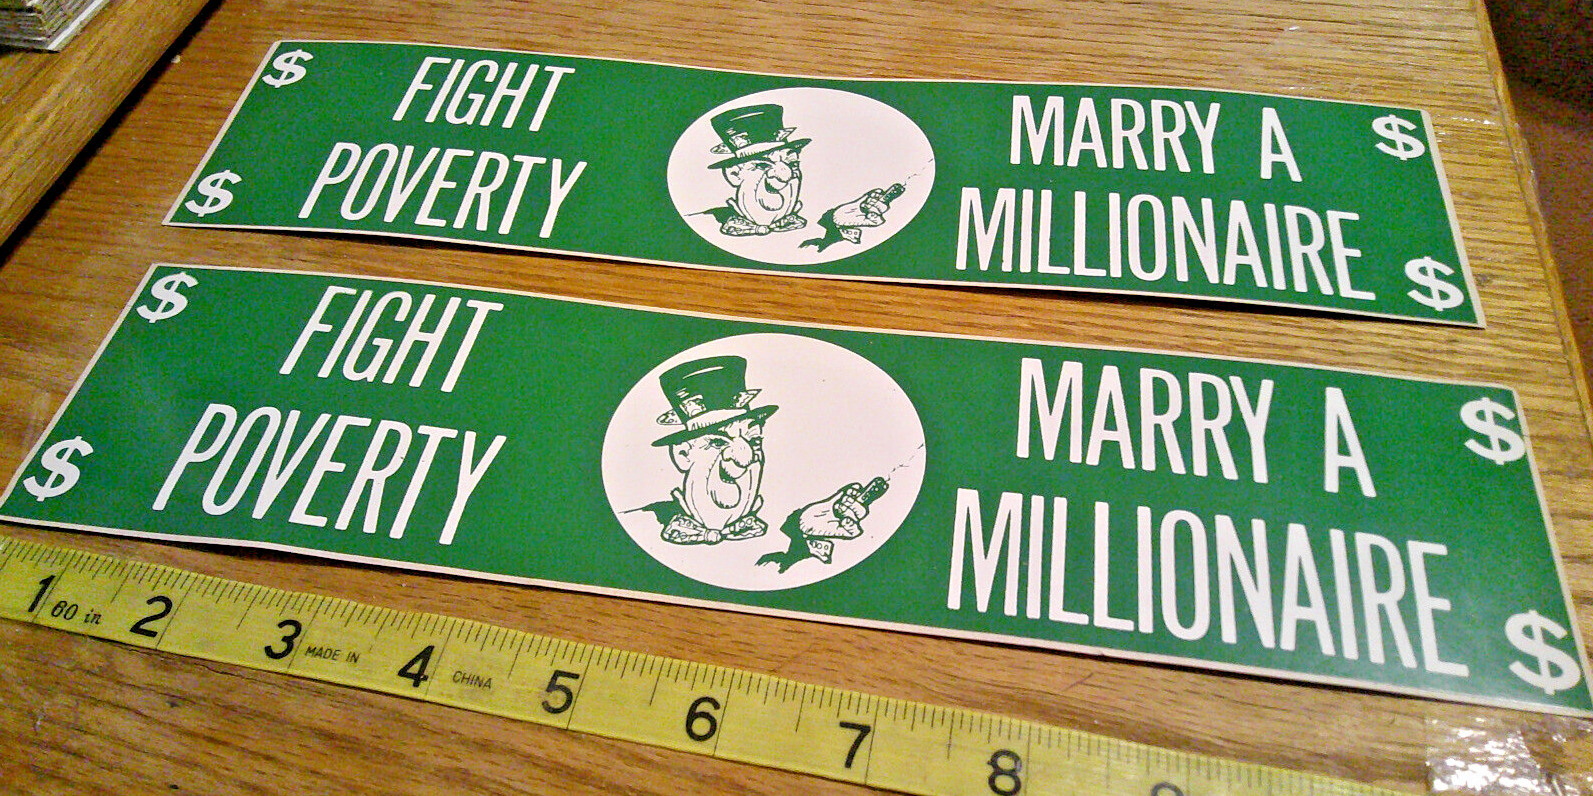 2 original VINTAGE 70's BUMPER STICKERS humor fight poverty marry a millionaire